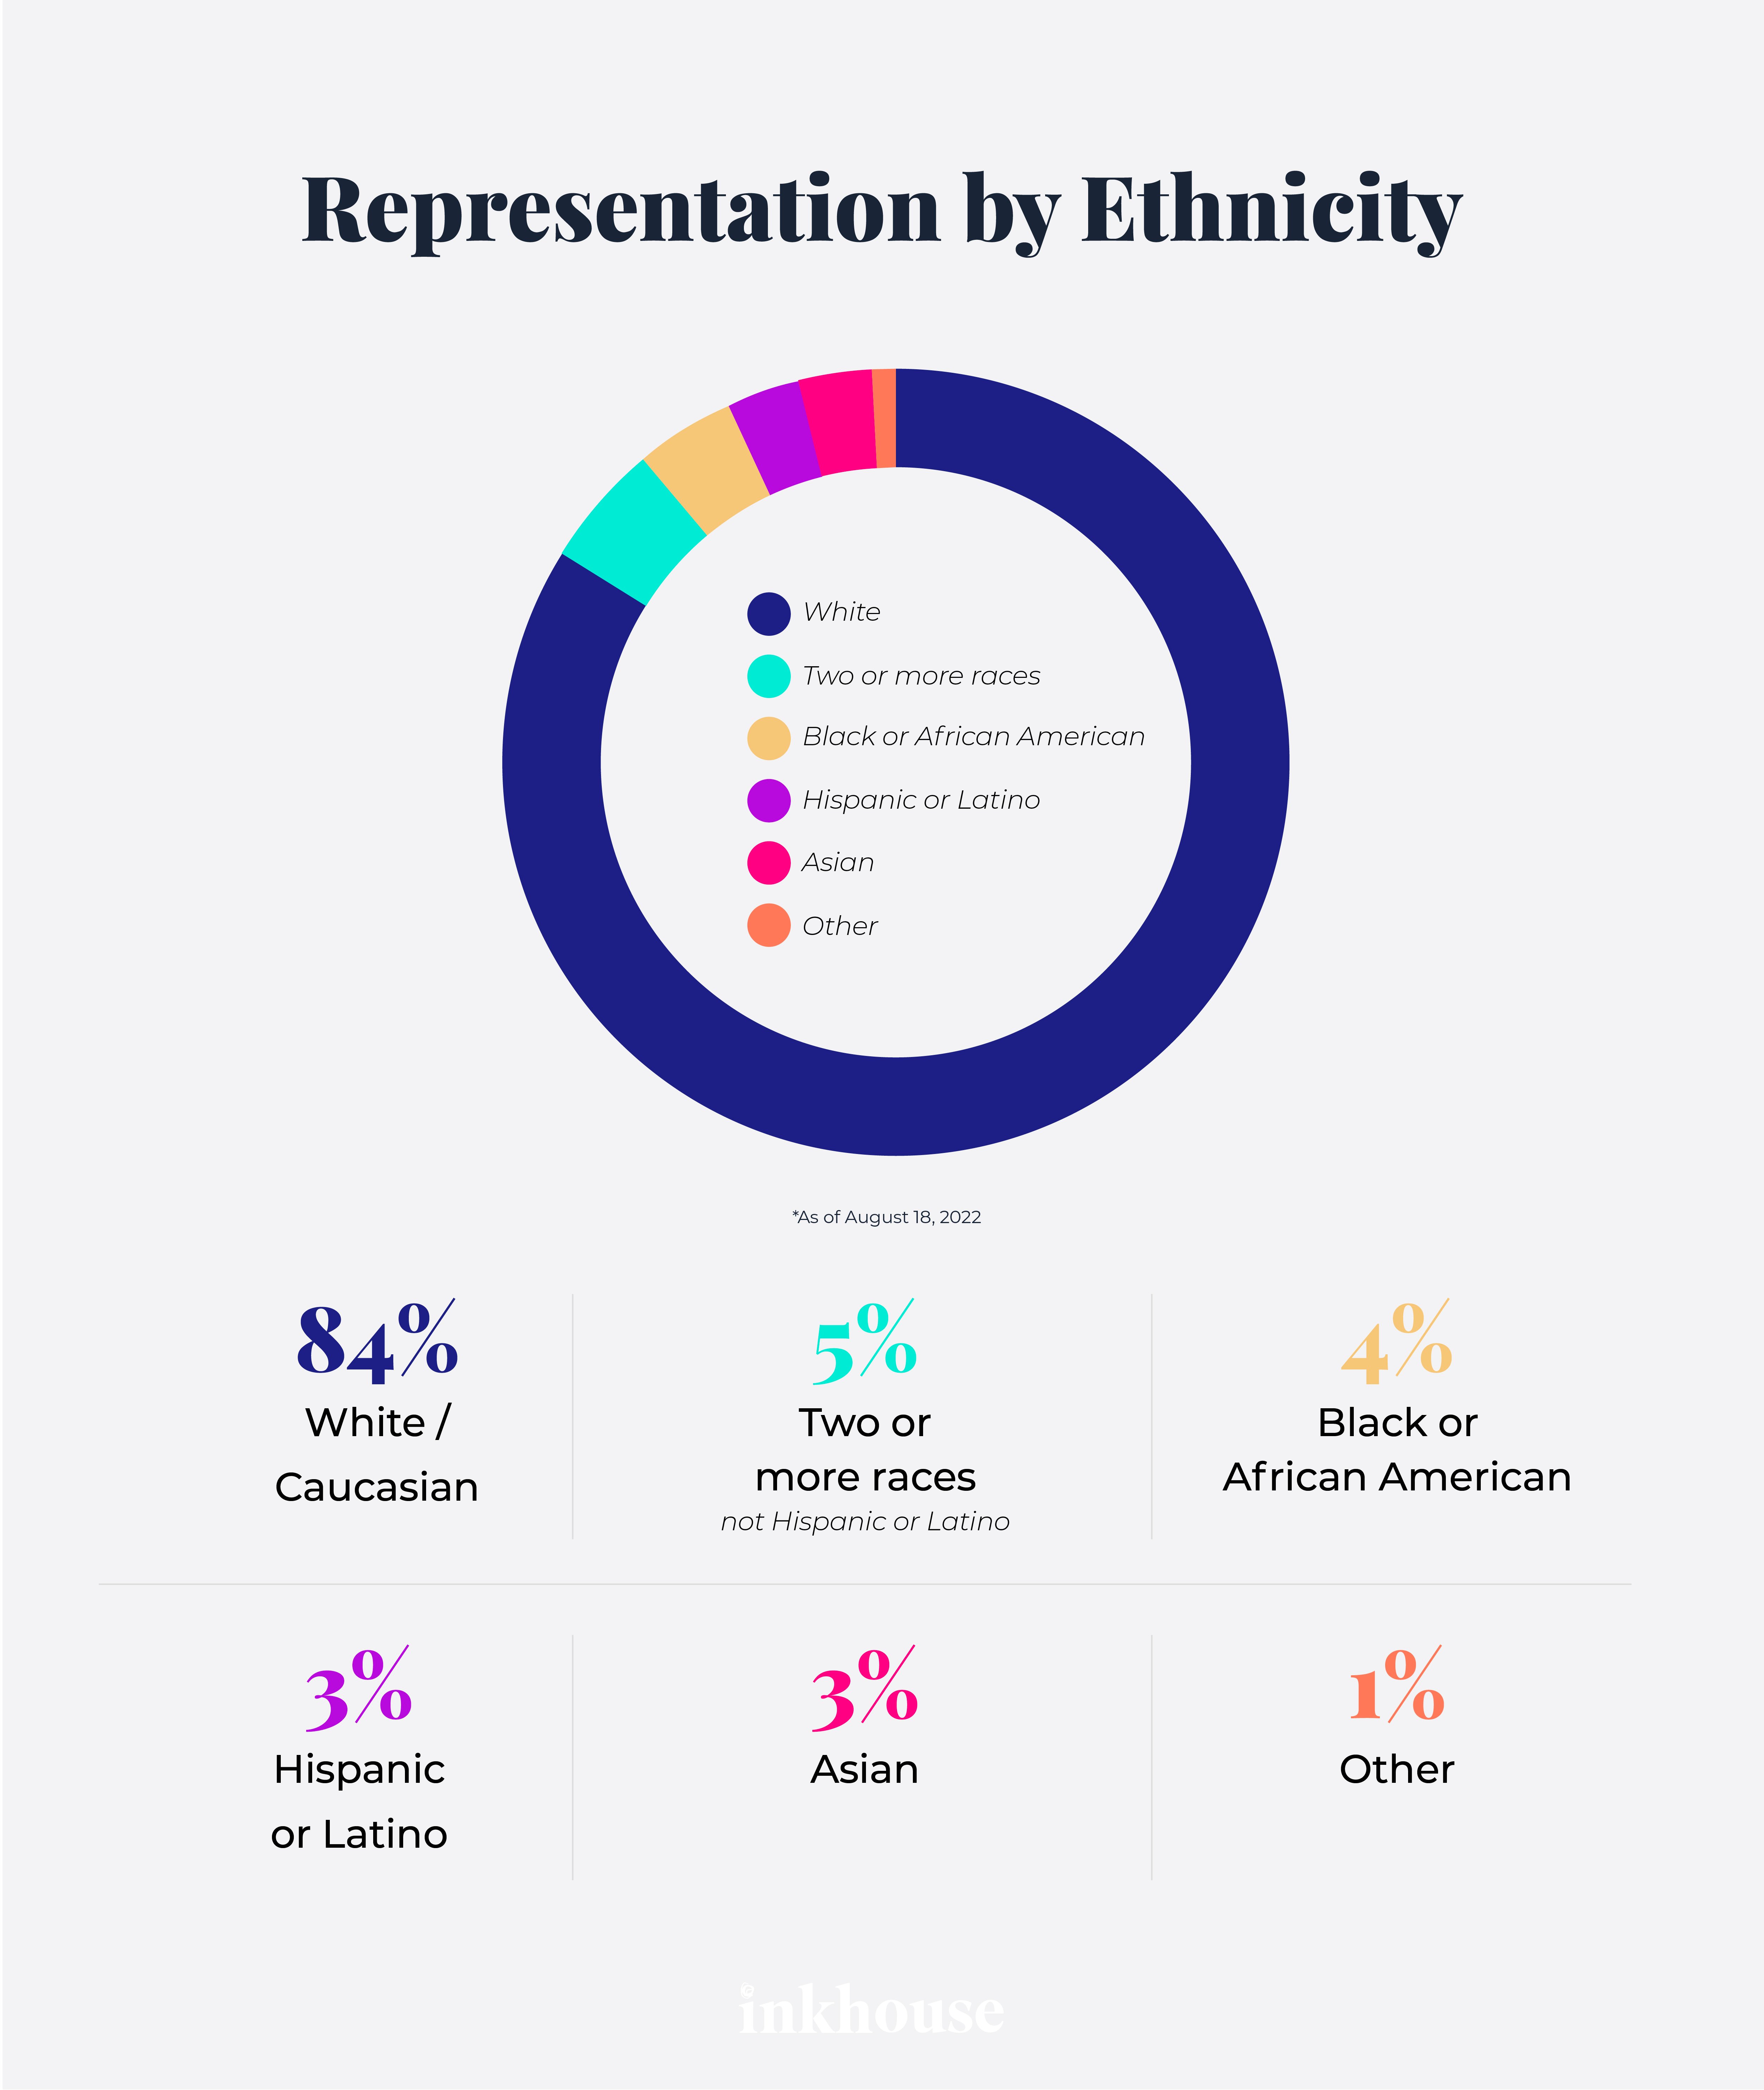 Ethnicity chart